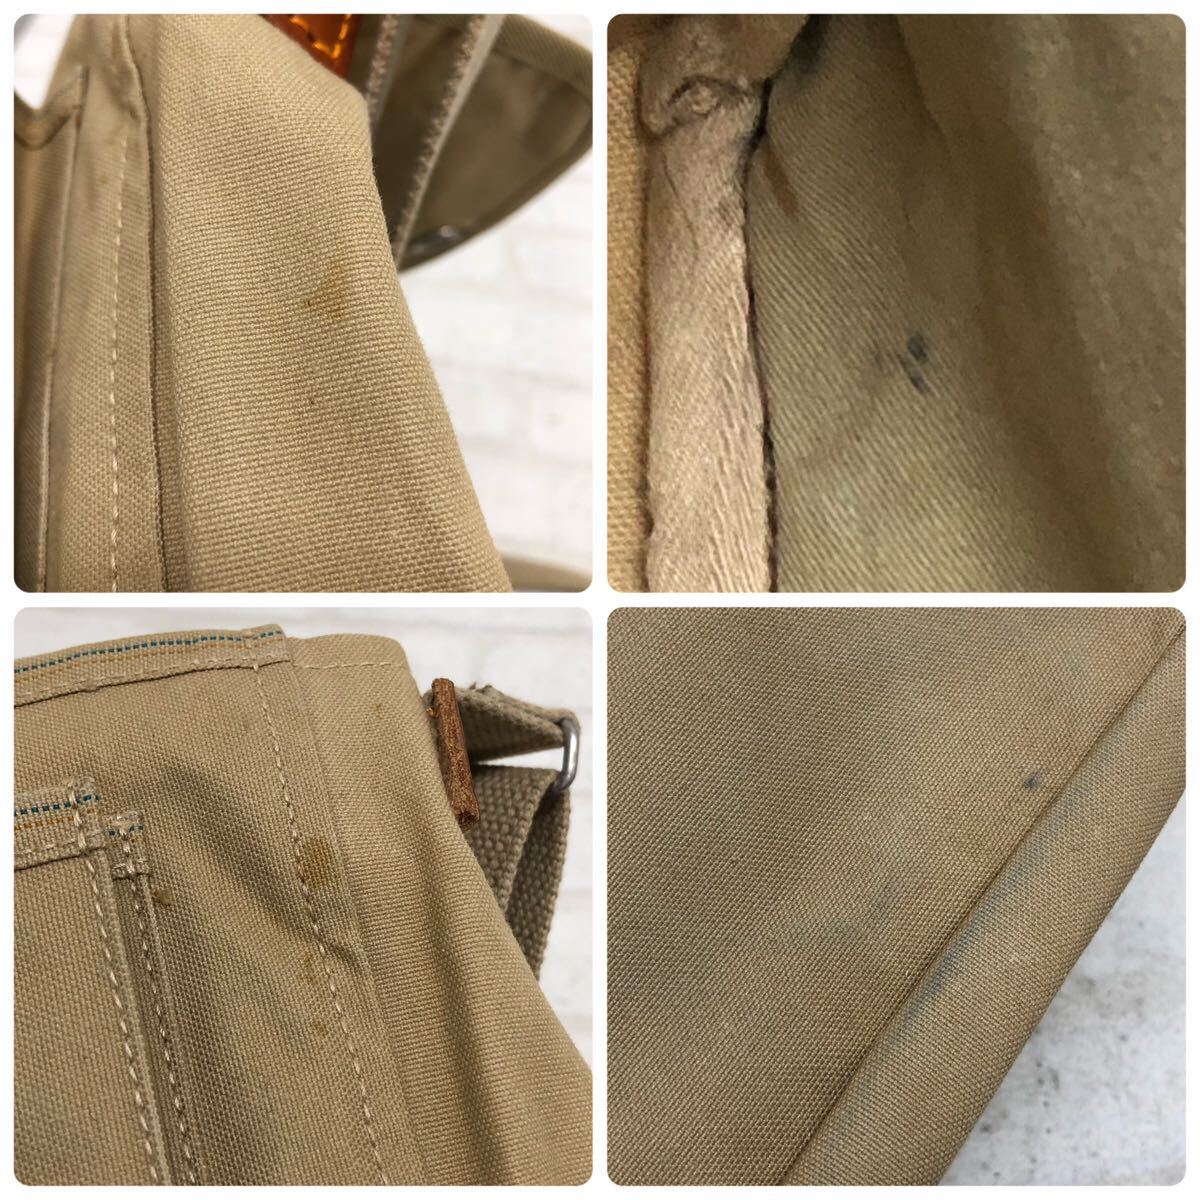 H# Ichizawa Hanpu made Mini shoulder bag beige group canvas length length diagonal ..sakoshu pochette smartphone pouch bag bag man and woman use 